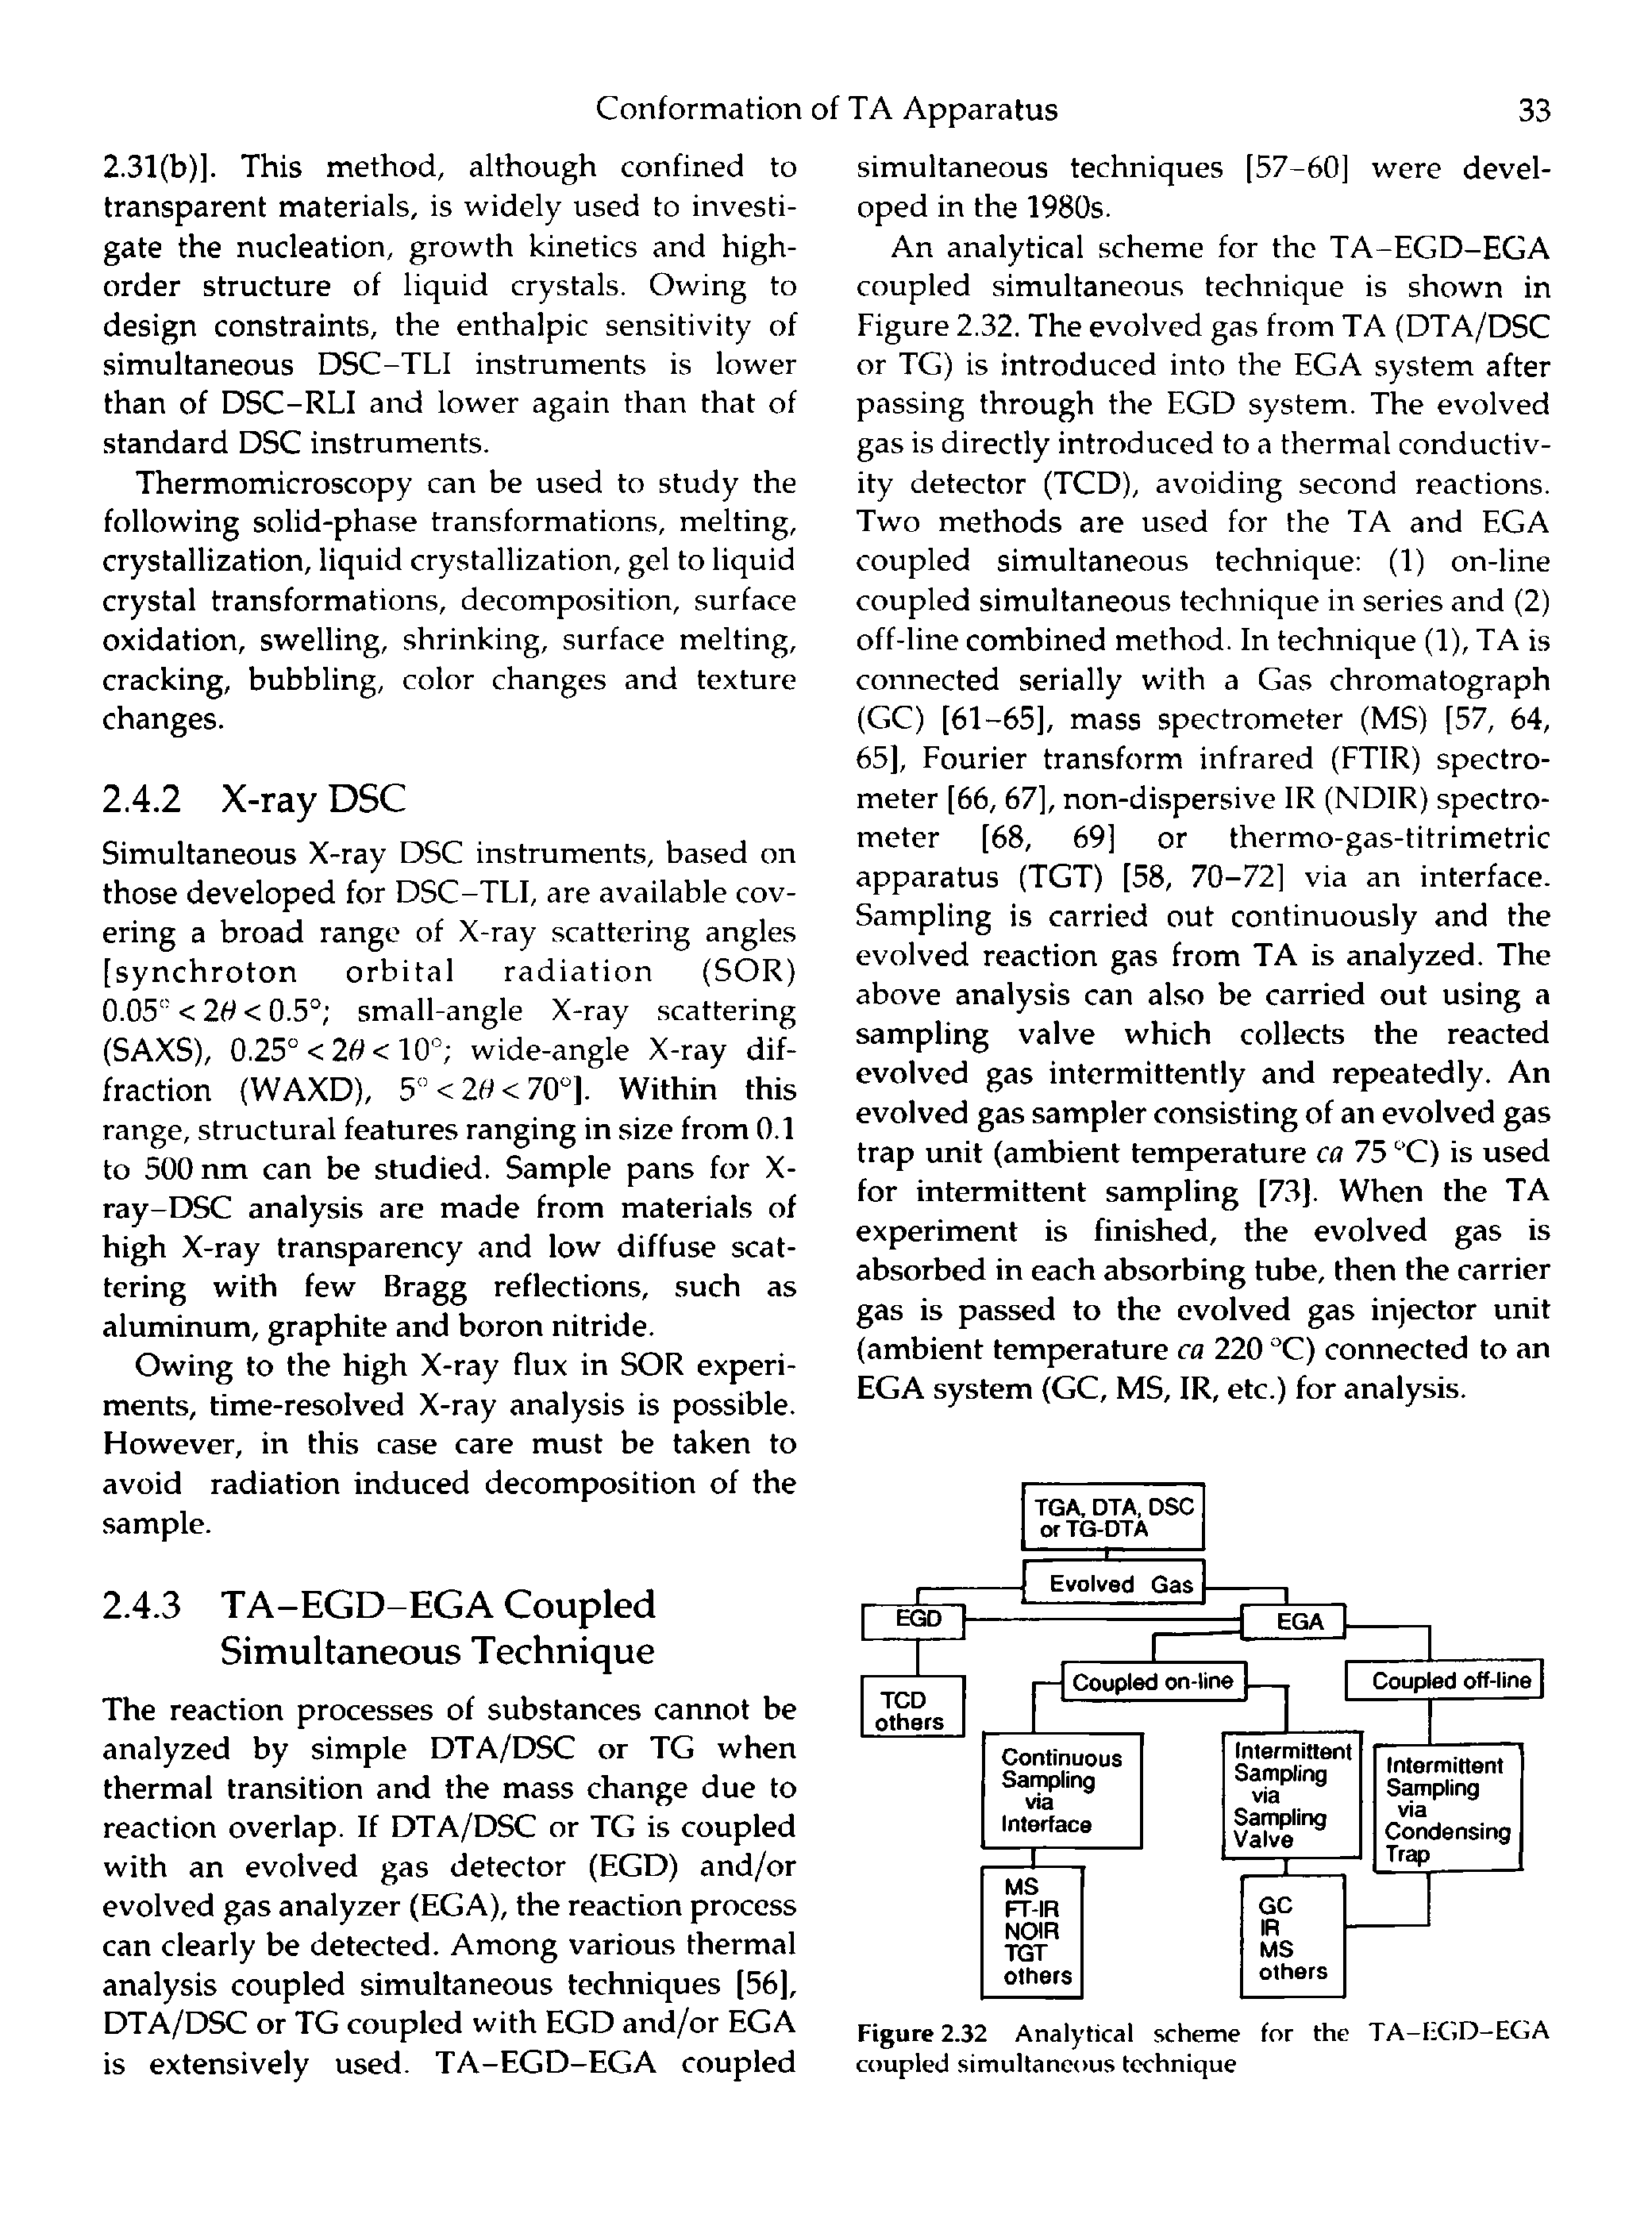 Figure 2.32 Analytical scheme for the TA-HGD-EGA coupled simultaneous technique...